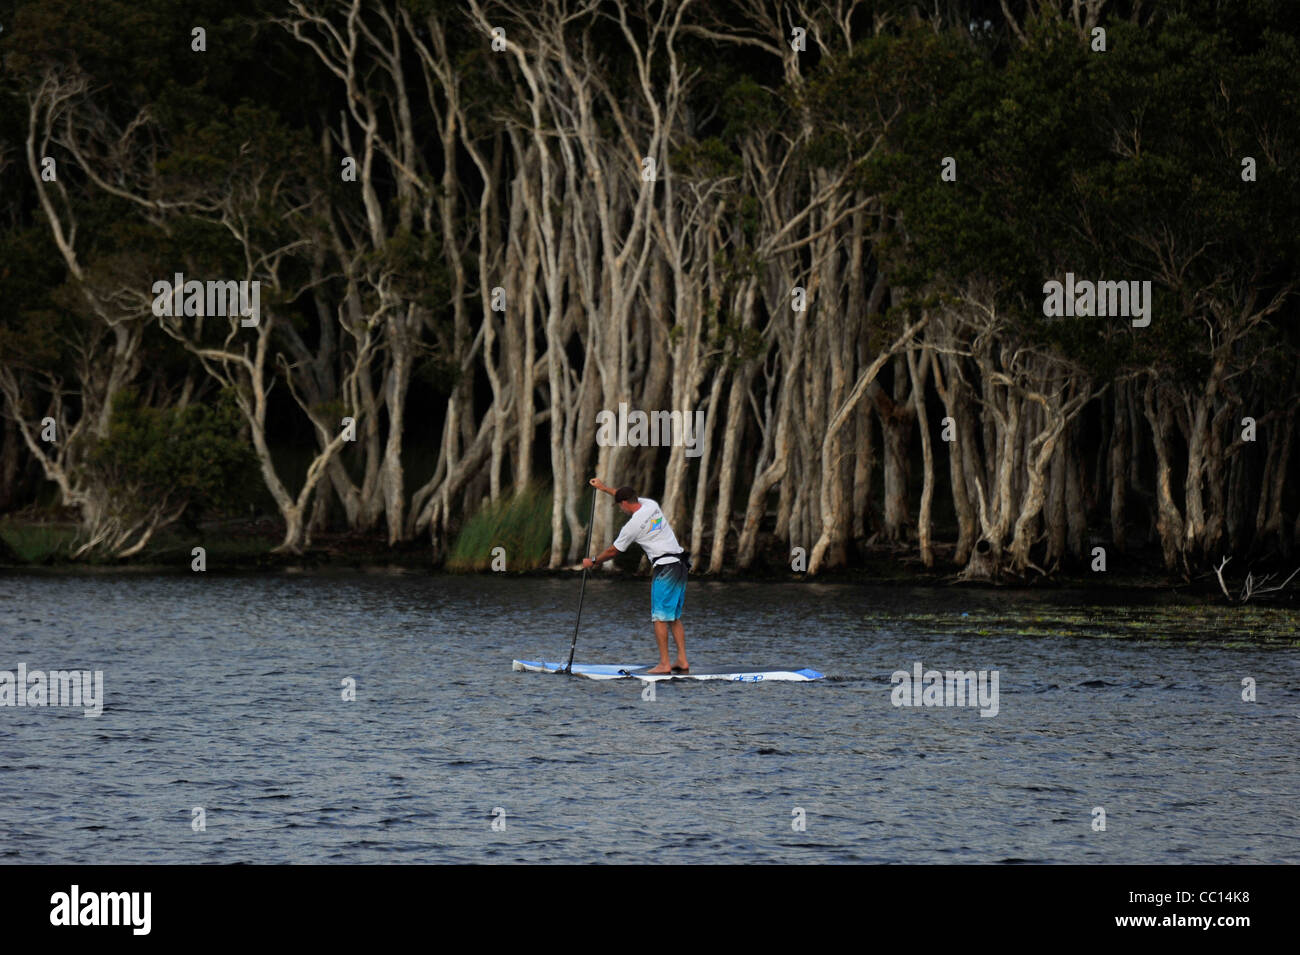 Un hombre remos un paddle board en un lago de agua dulce con Paperbark bosque detrás. Foto de stock